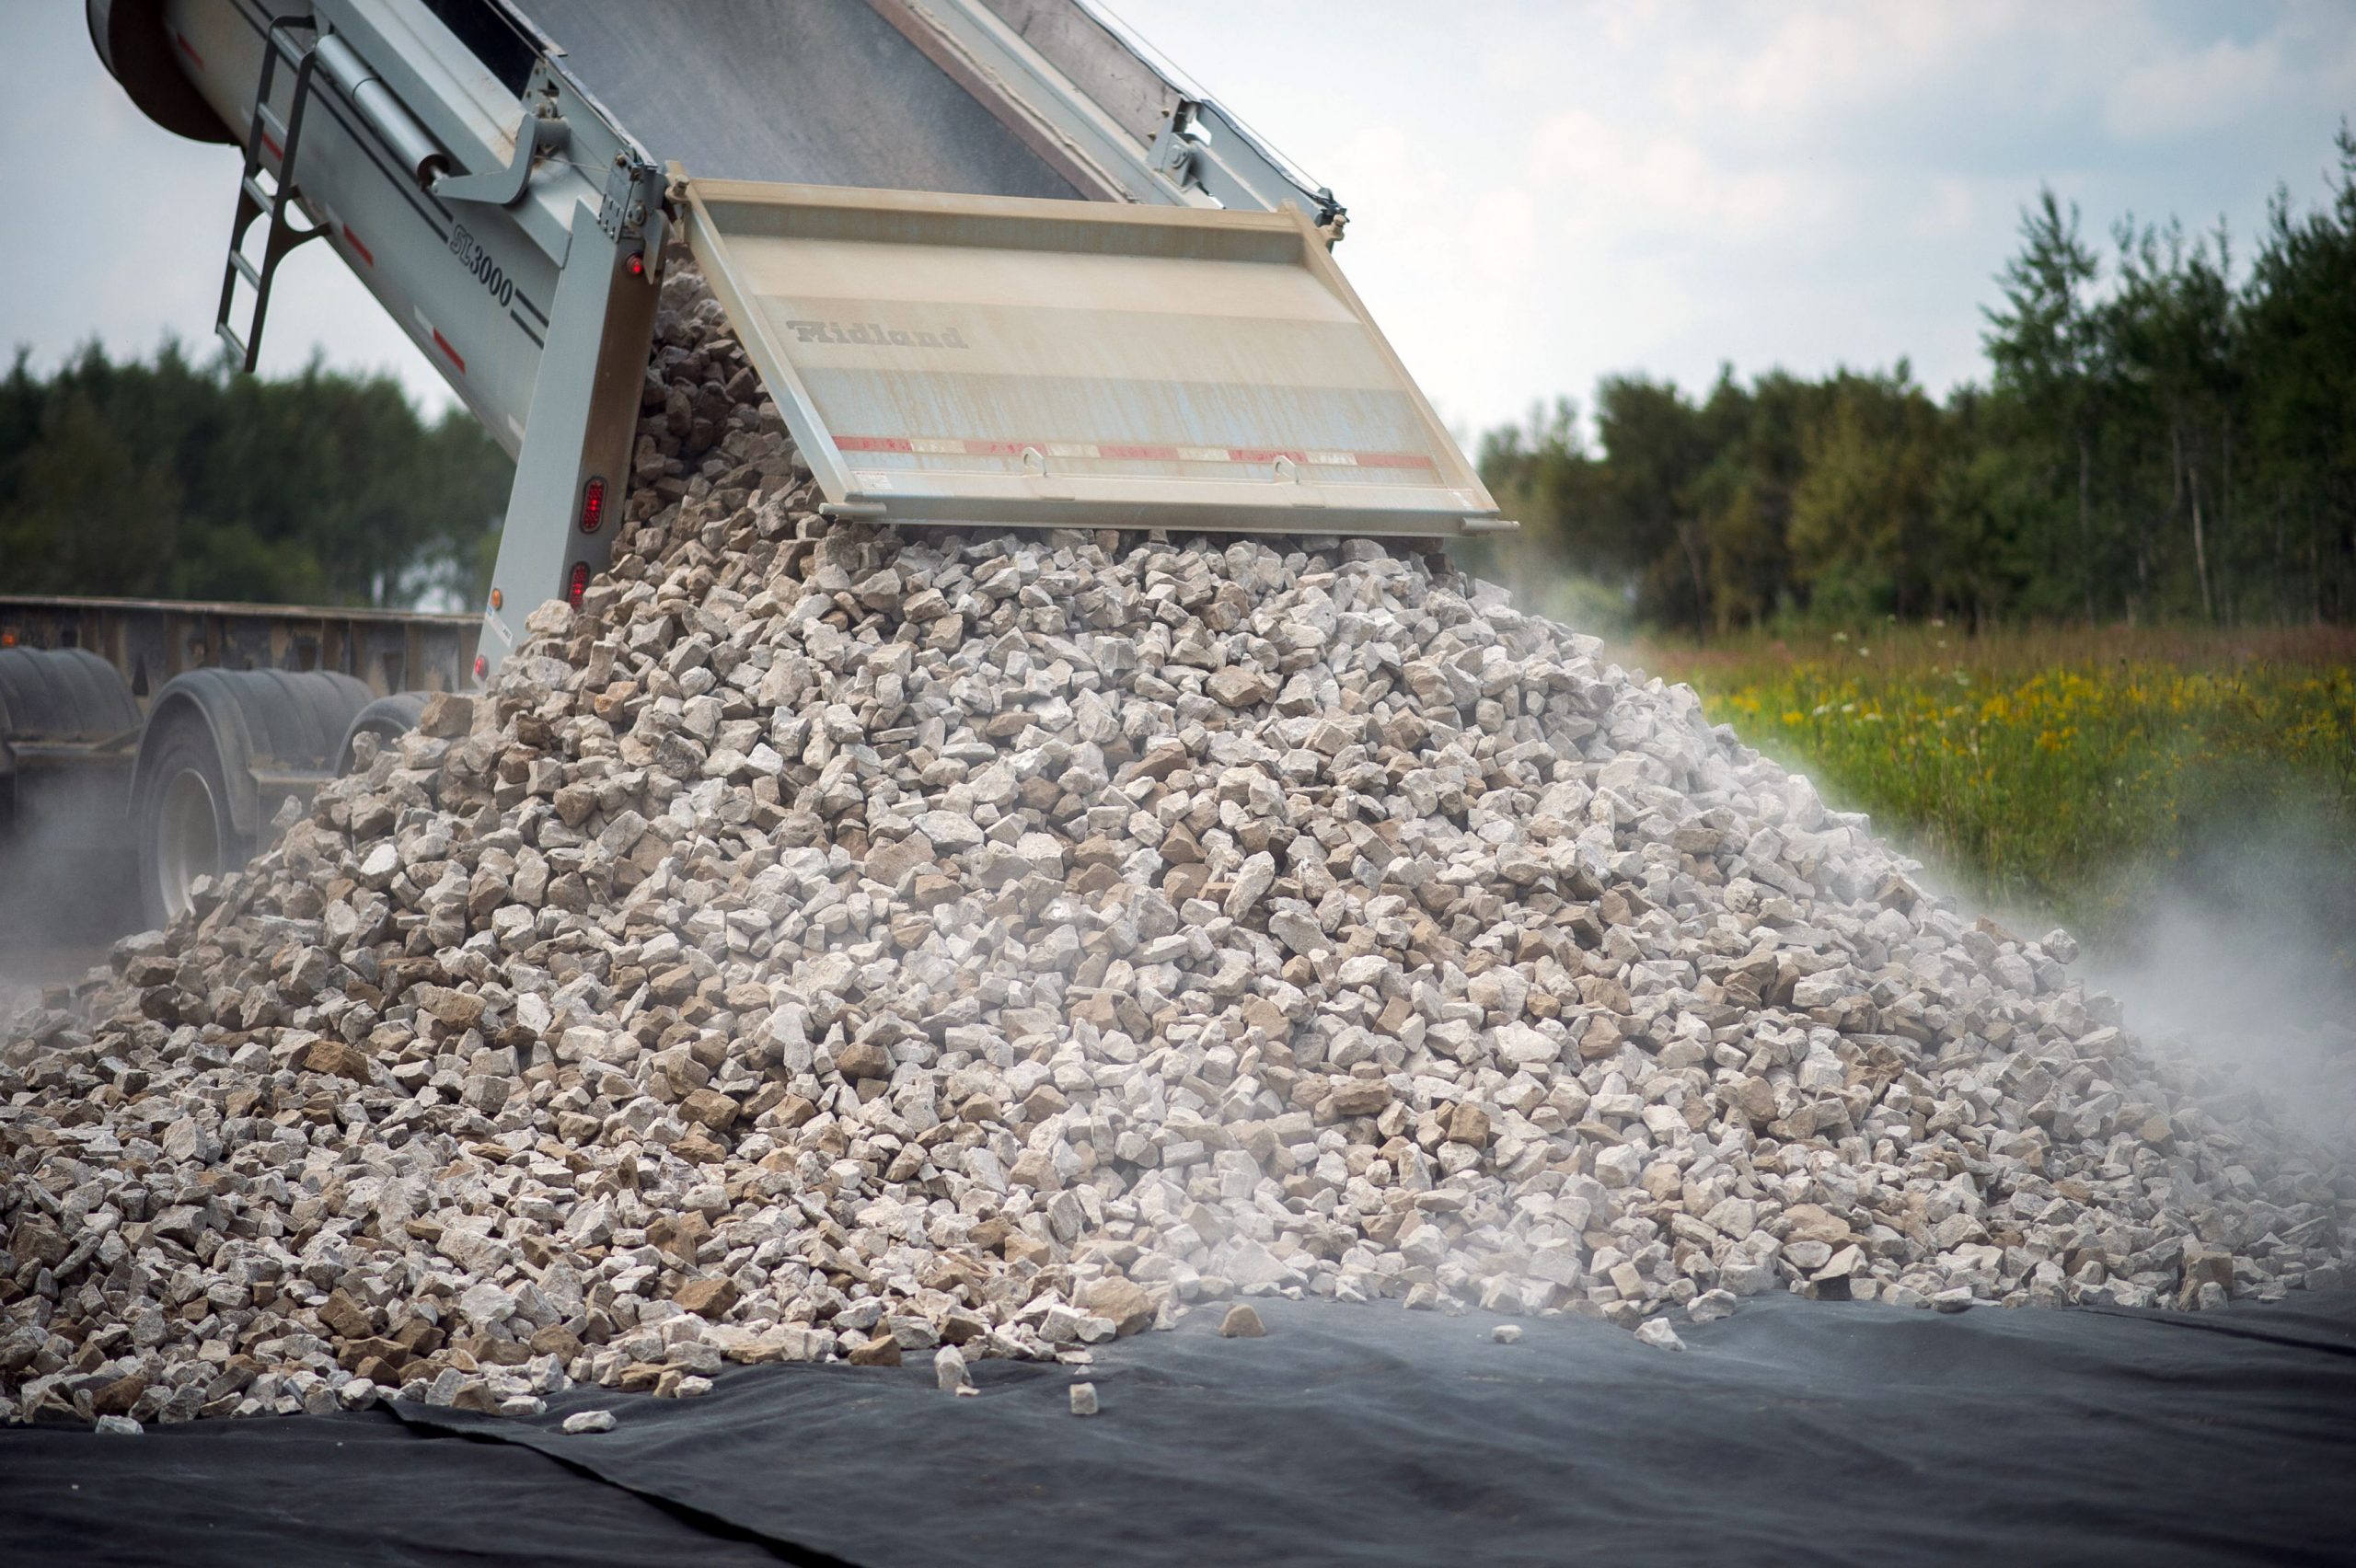 A dump truck unloading stones onto a tarp.